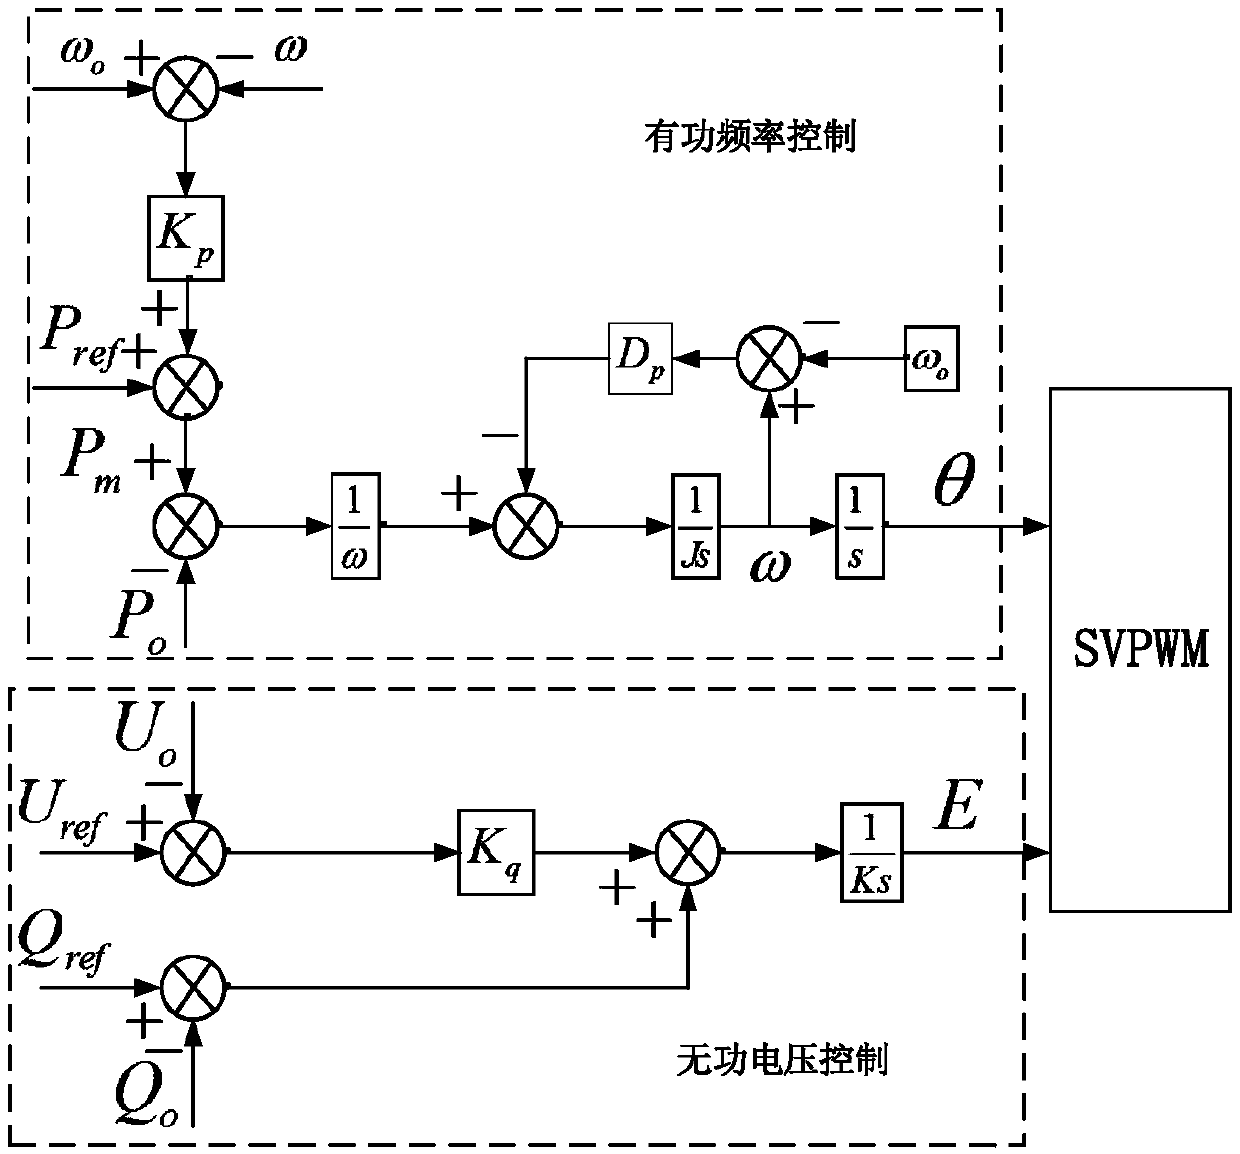 Virtual synchronous generator control method based on droop coefficient adaptive adjustment